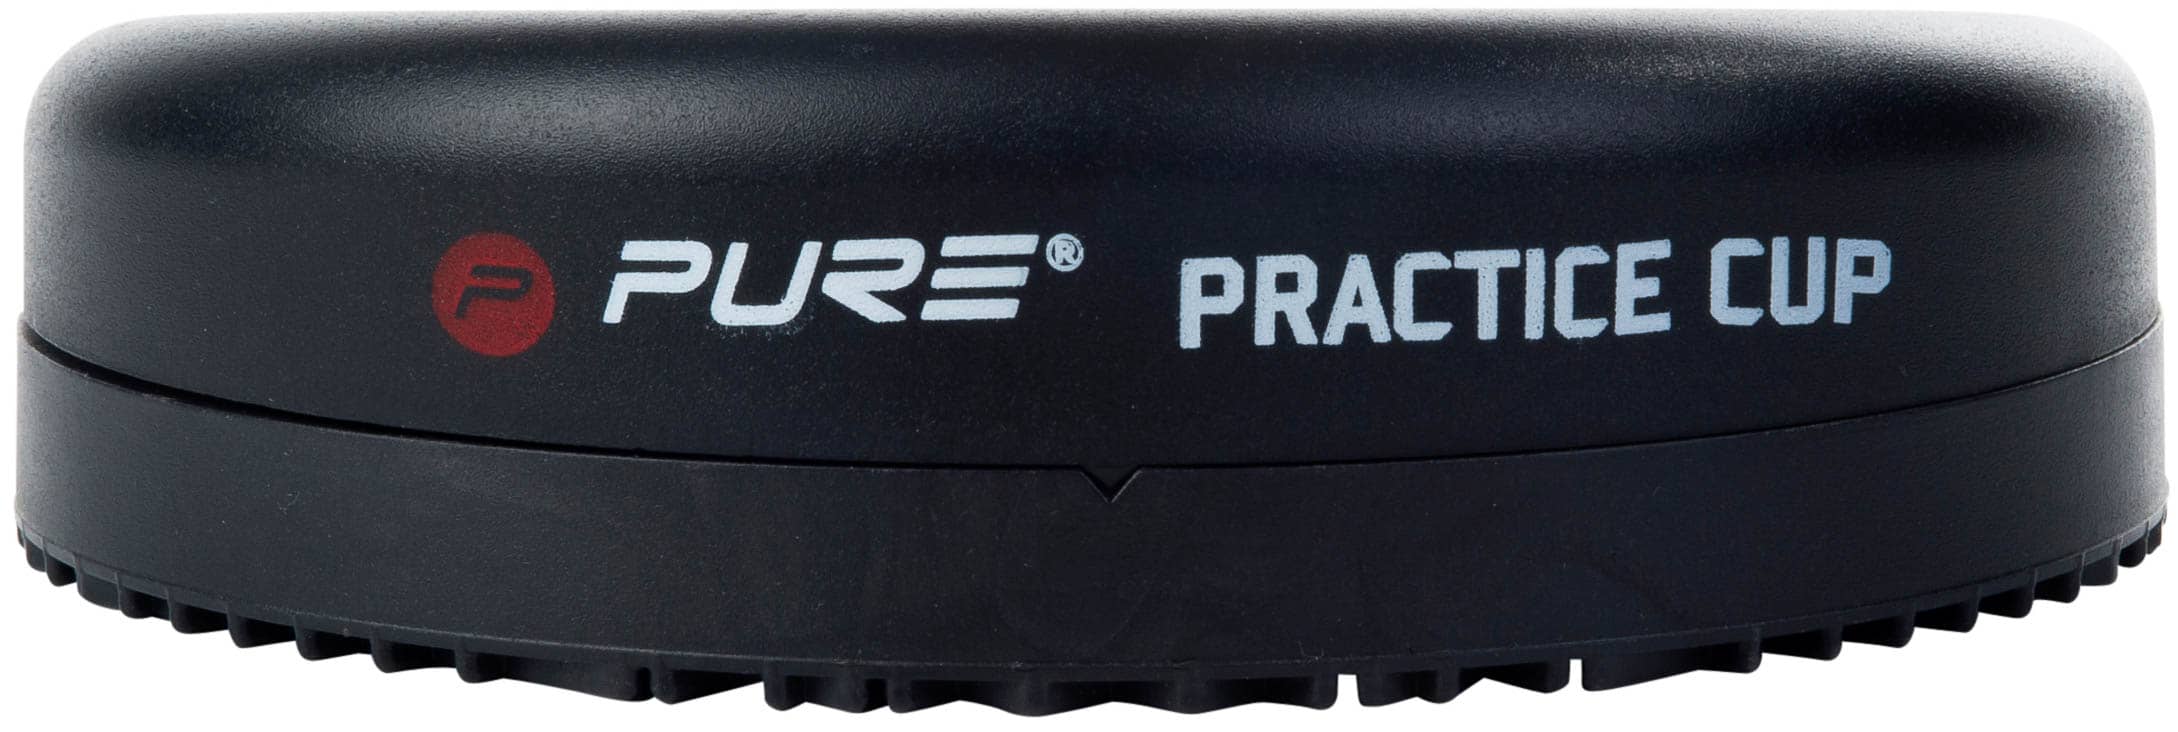 Pure 2 Improve Practice Cup Trainingshilfe